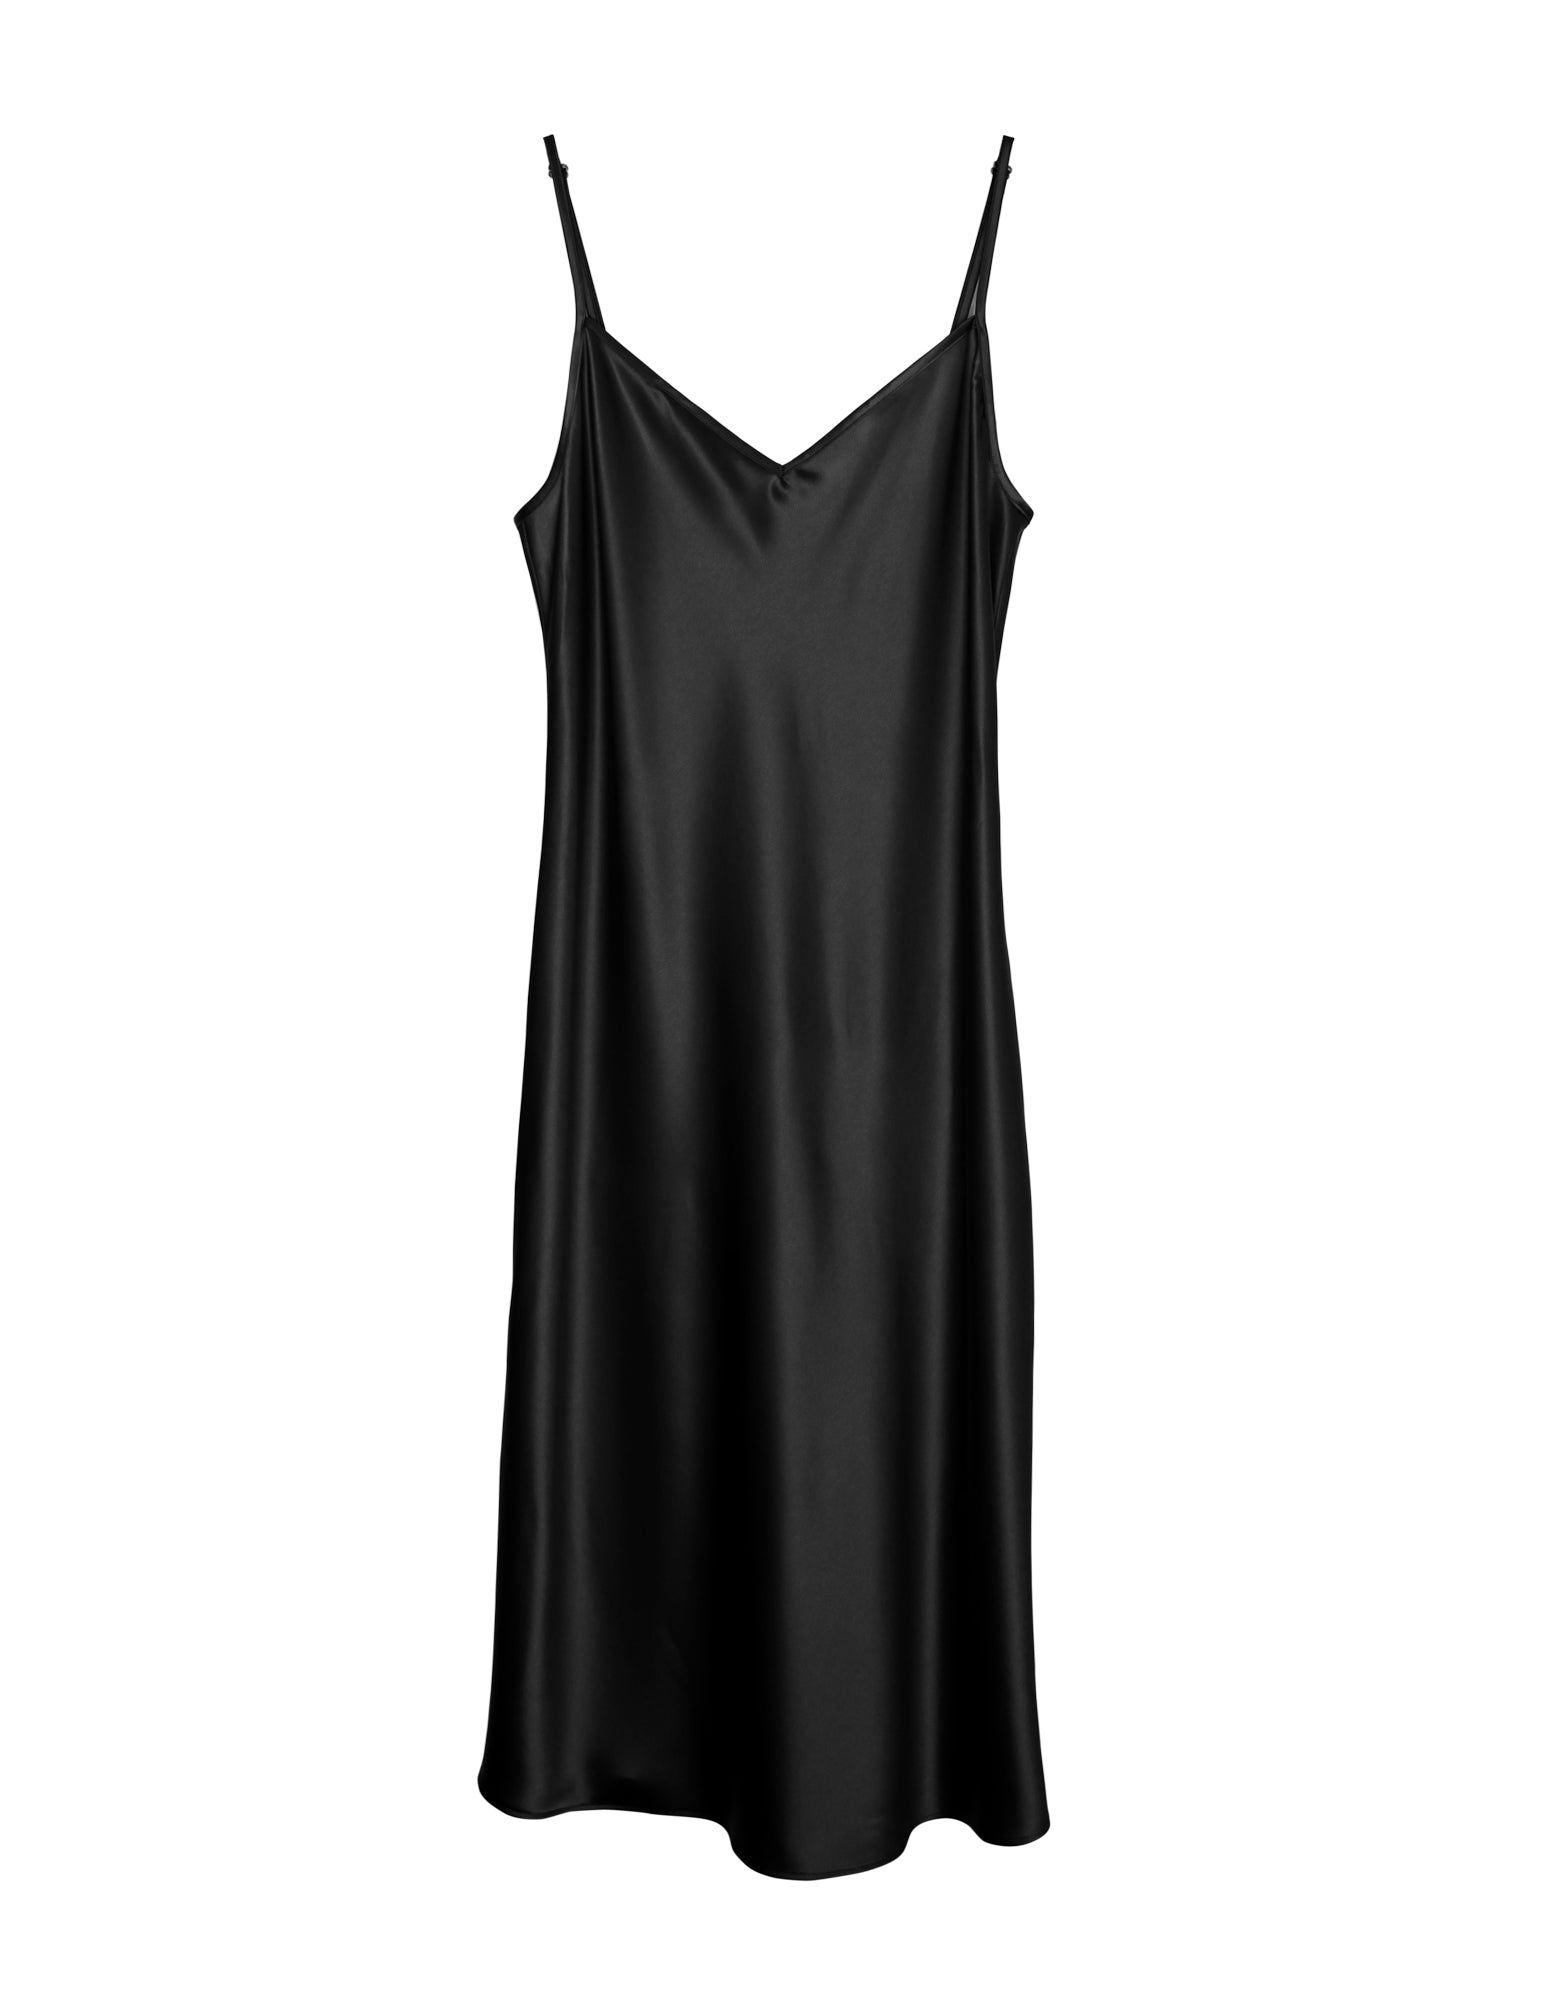 V-neck bias cut slip on dress, with adjustable straps, in black crepe back satin.Plus Size, Size Inclusive Dress